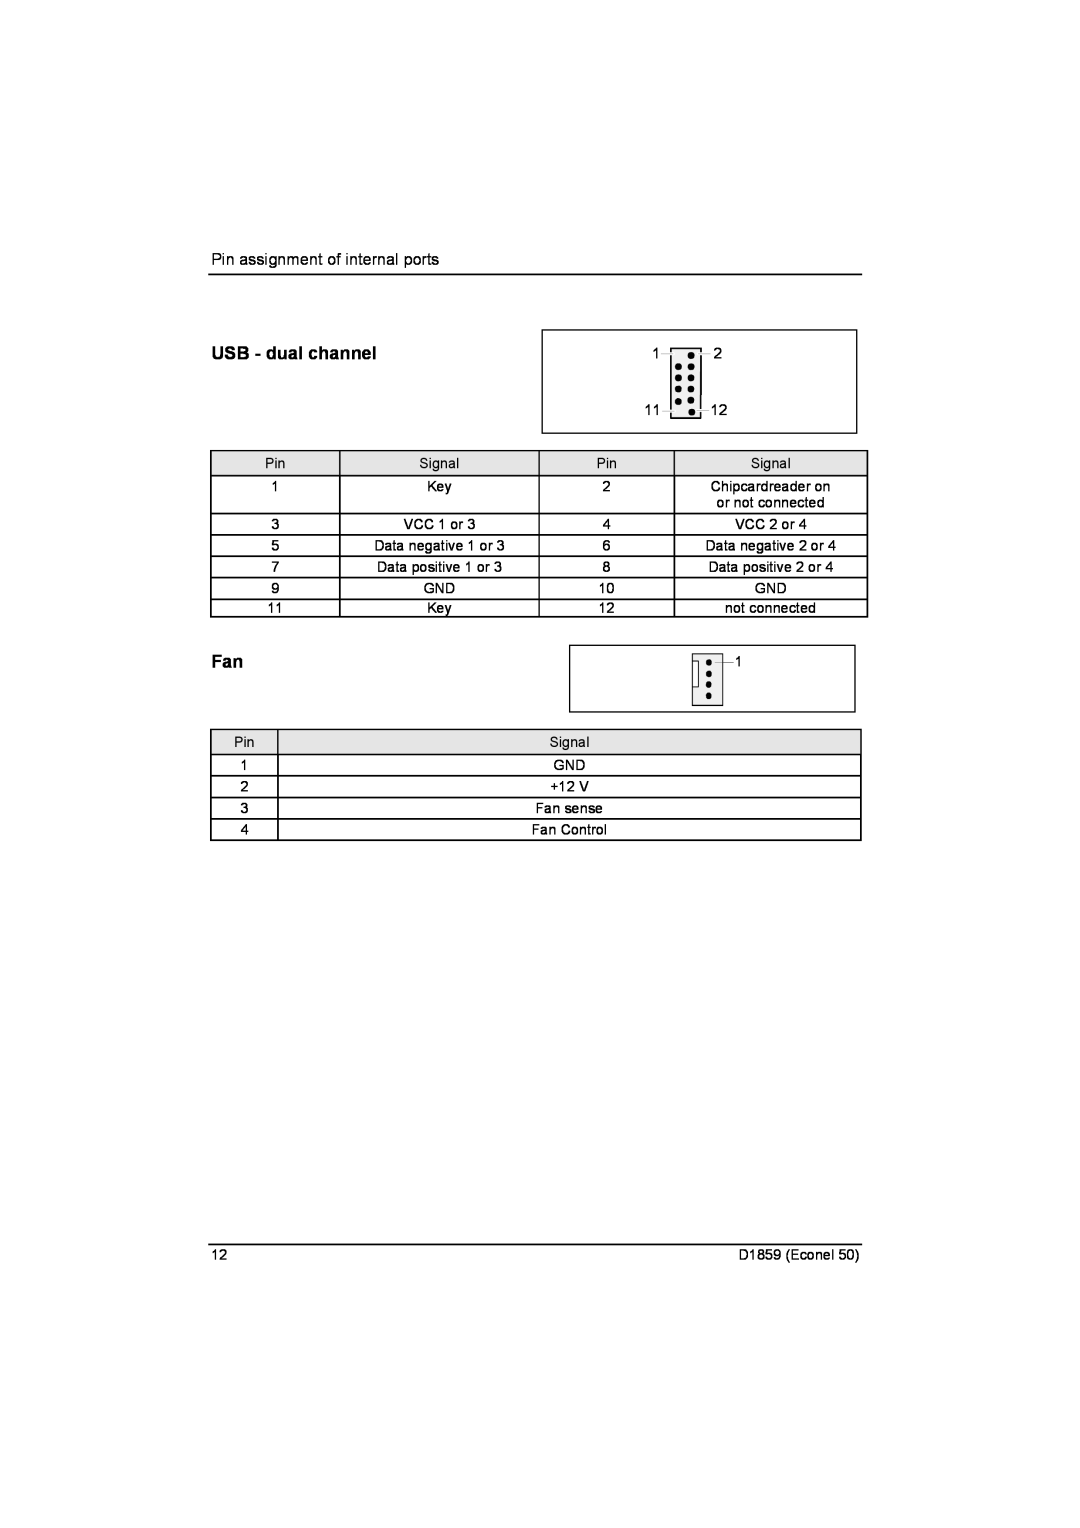 Fujitsu D1859 technical manual USB - dual channel, Pin assignment of internal ports 